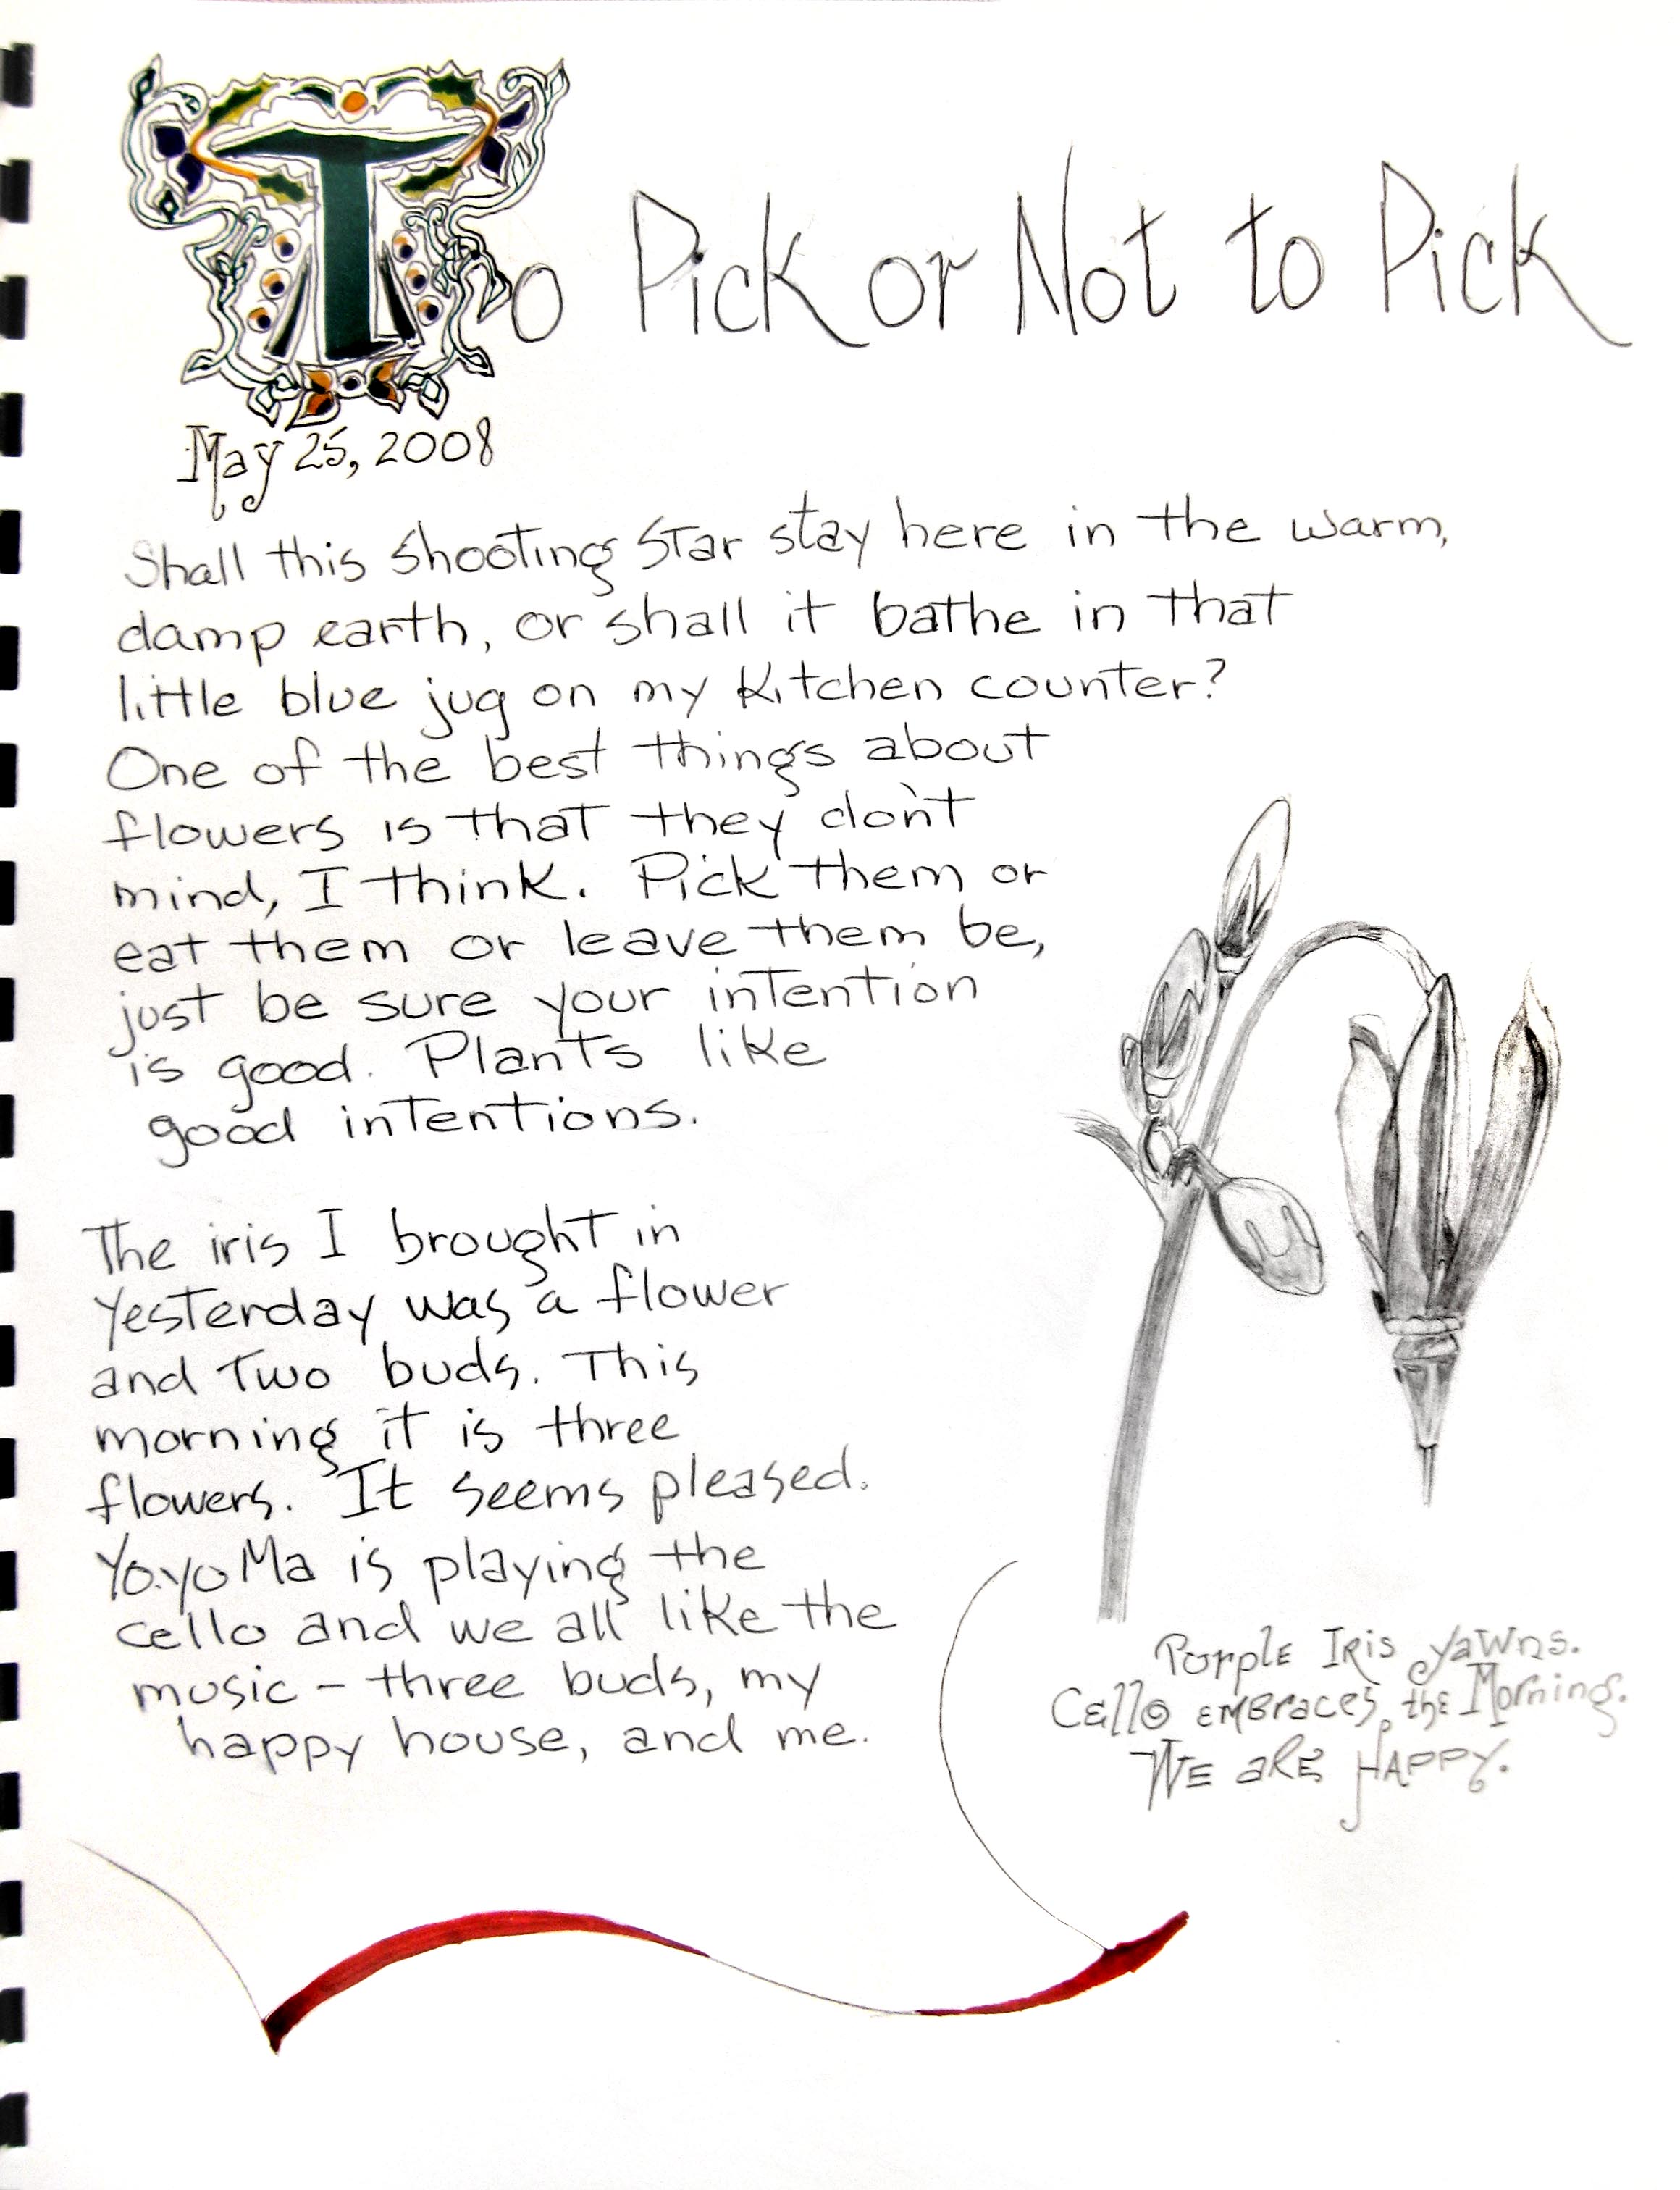 Darrel's Flower Journal Page...